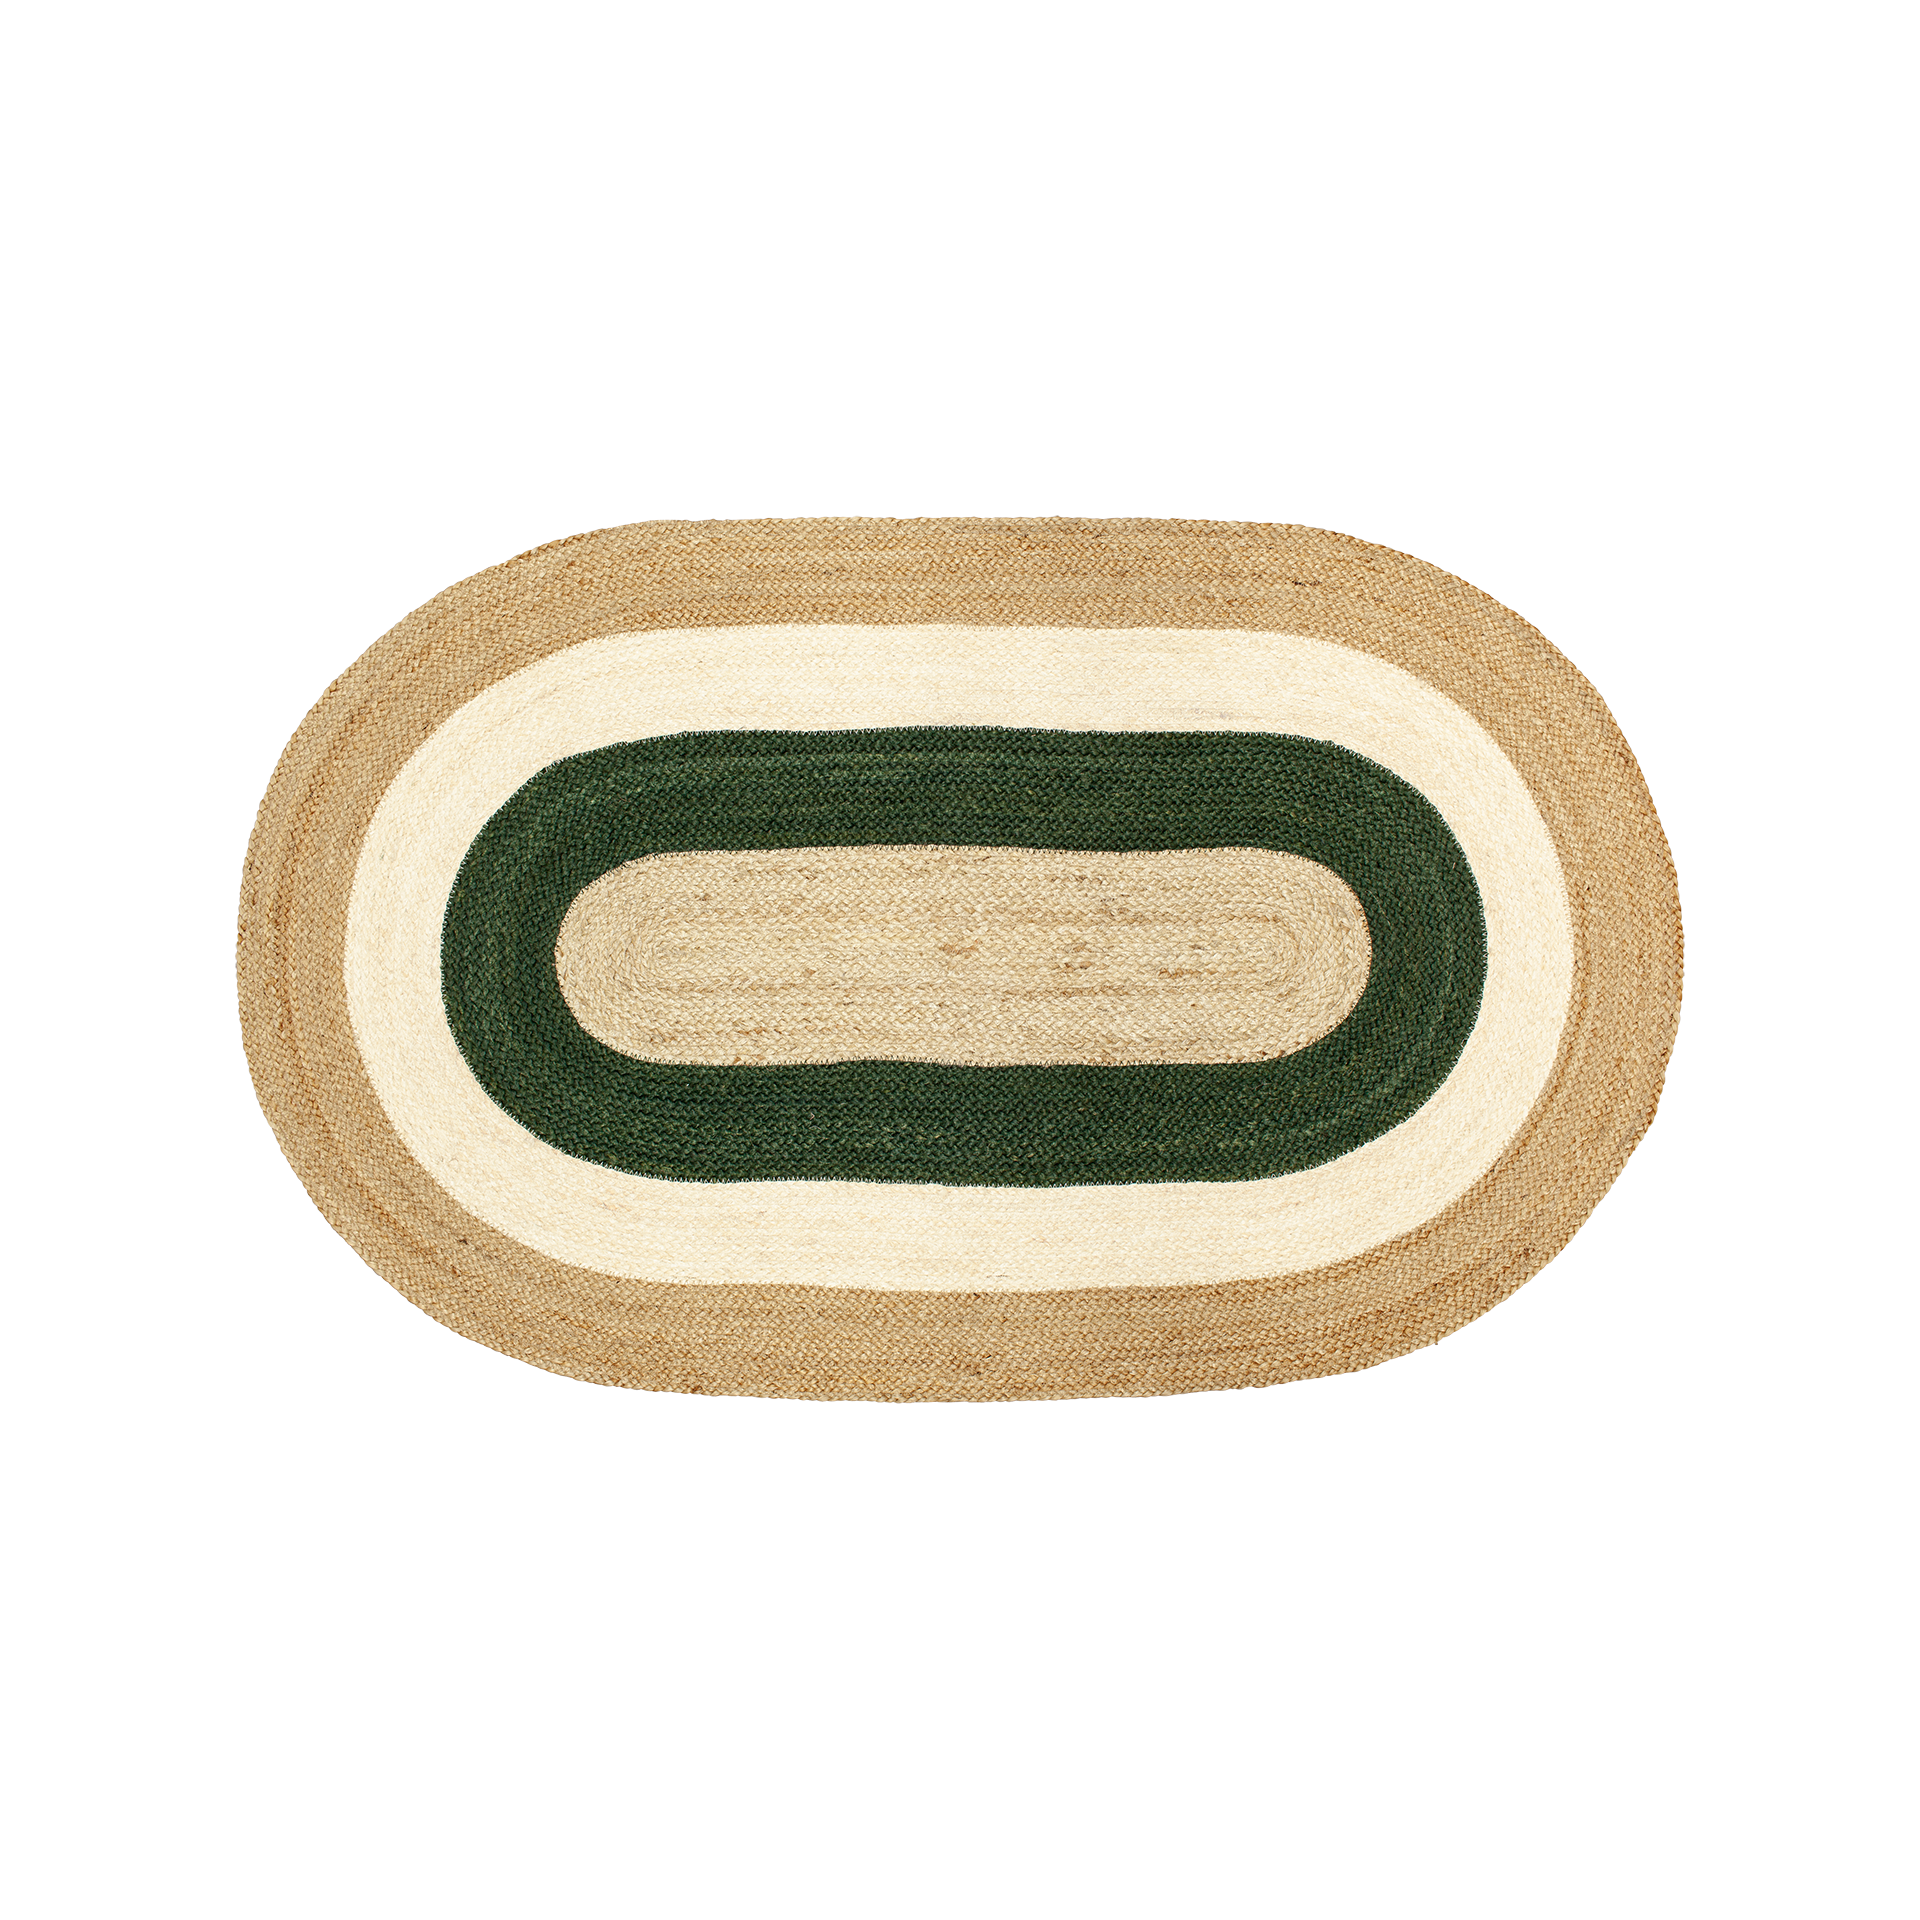 Rug Elin oval green 150x92cm